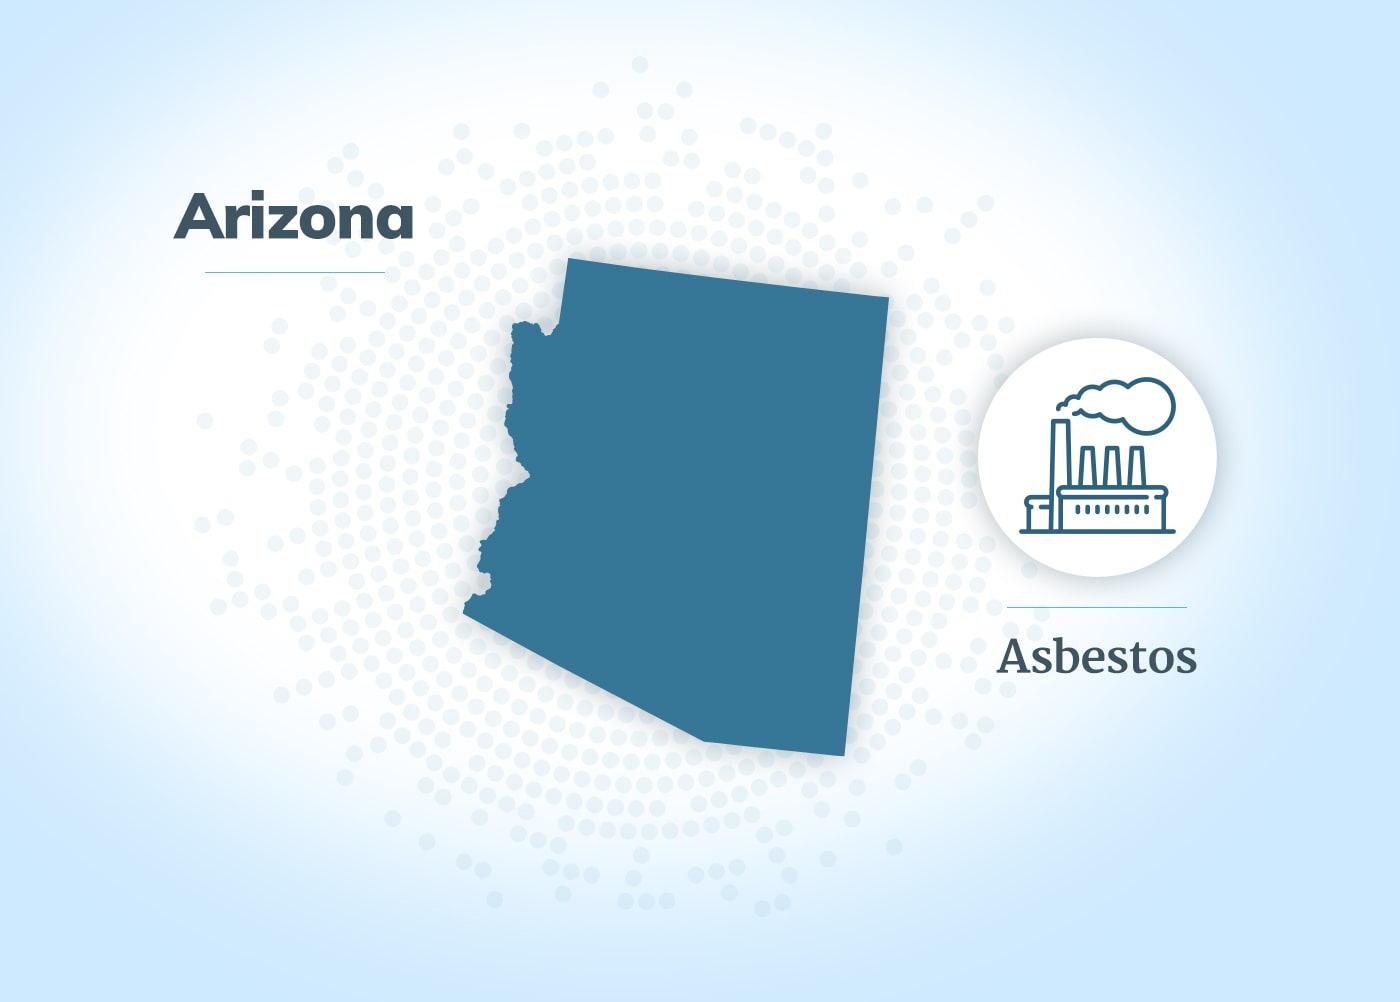 Asbestos exposure in Arizona